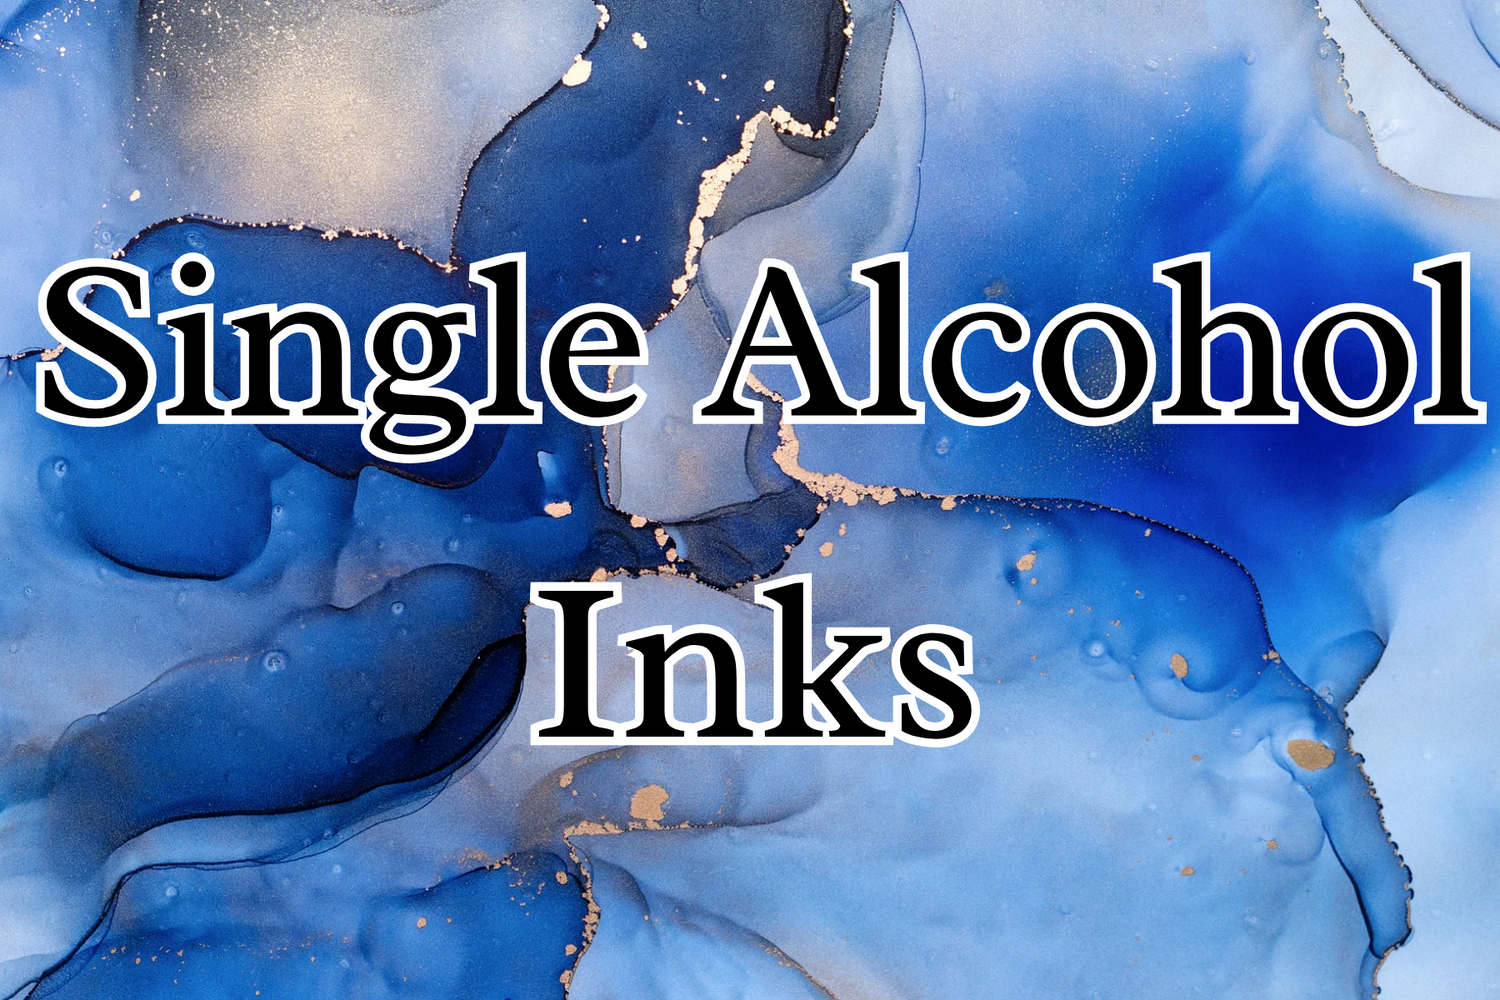 Single Alcohol Inks